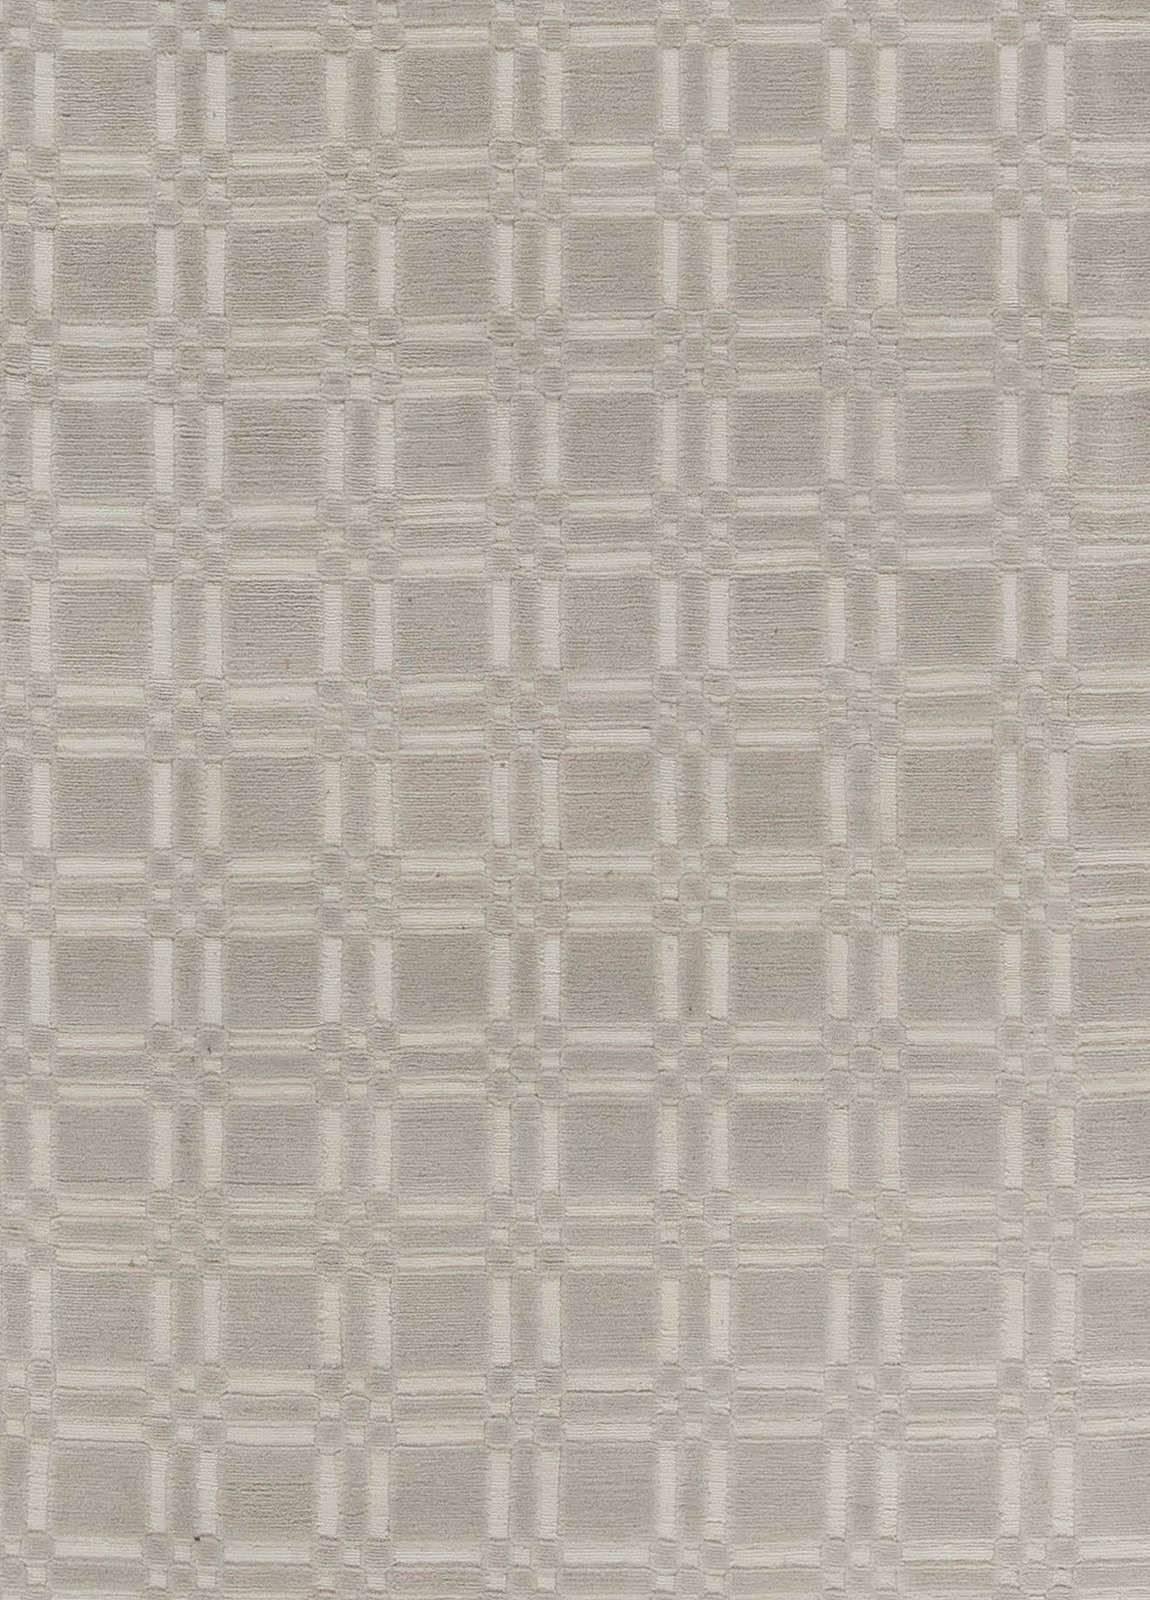 Contemporary Geometric gray handmade silk and wool rug by Doris Leslie Blau
Size: 12'2